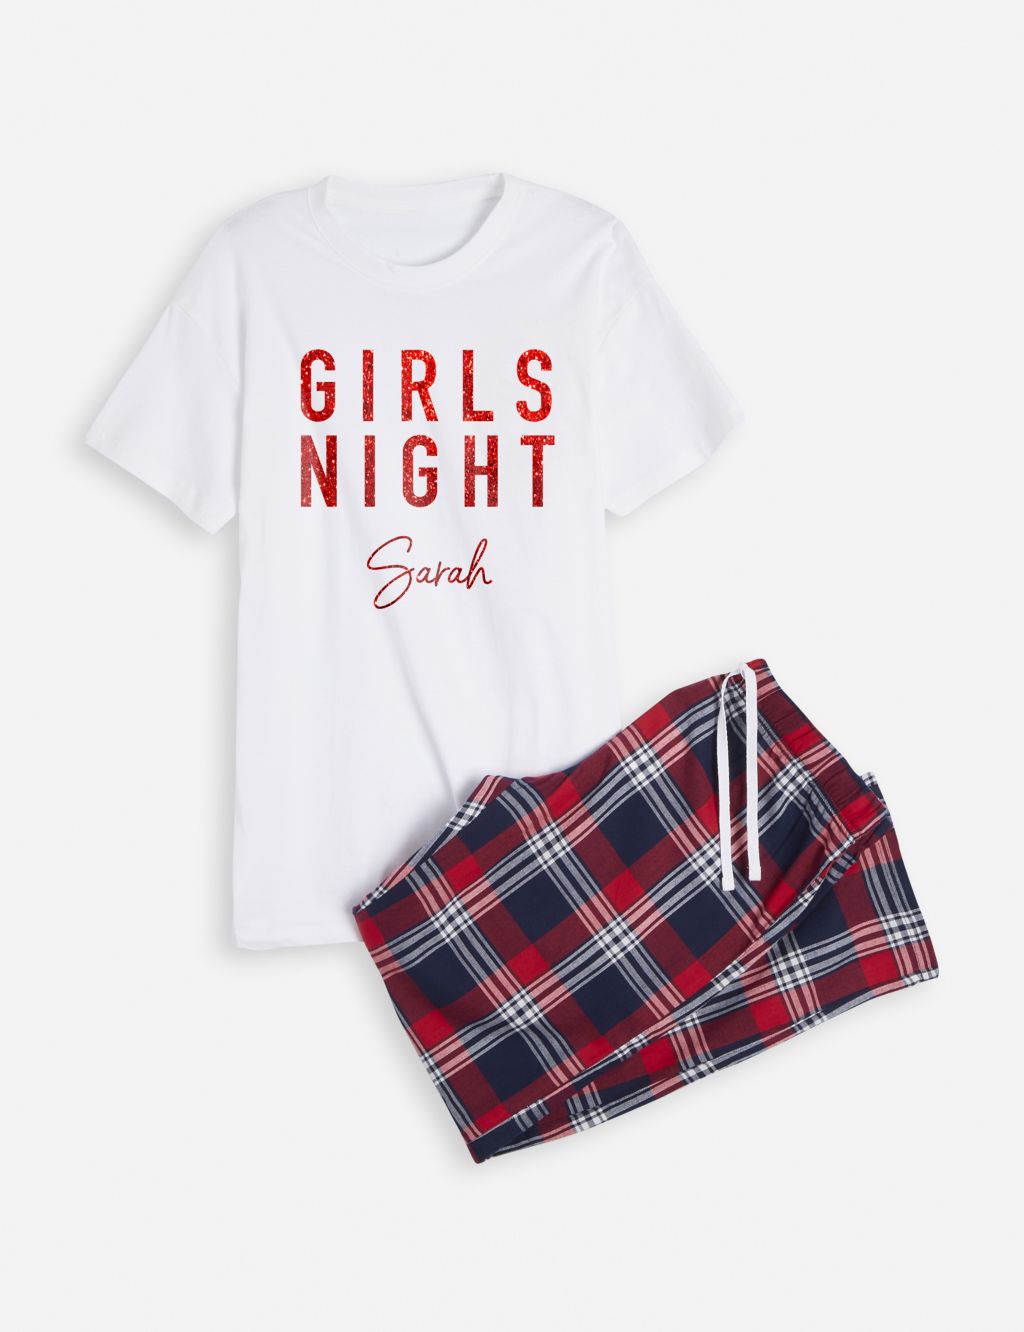 Personalised Ladies Girls Night Pyjamas by Dollymix 3 of 3